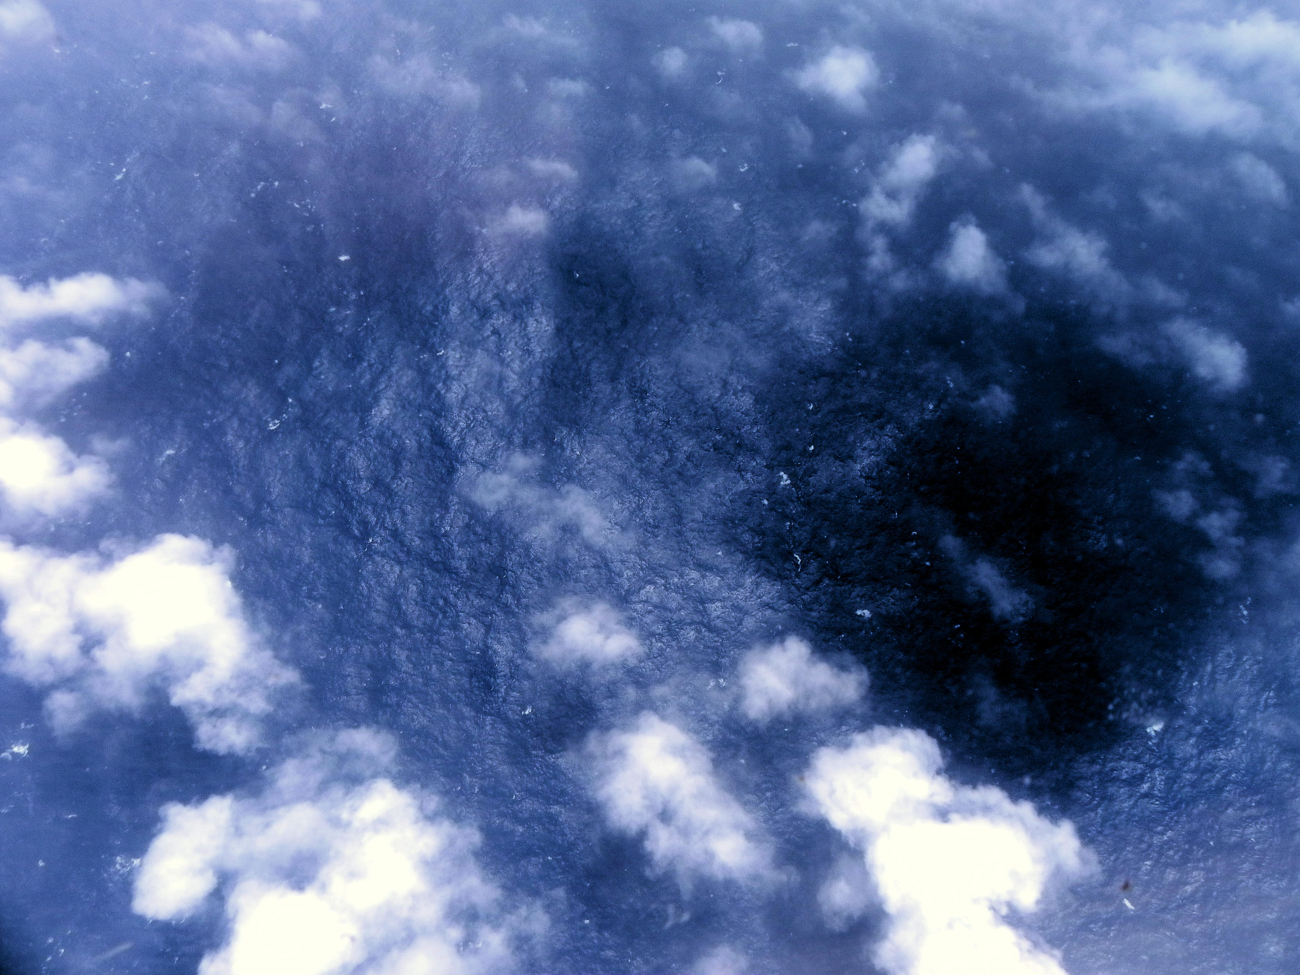 Sea surface in Hurricane Edouard seen from 8000 feet